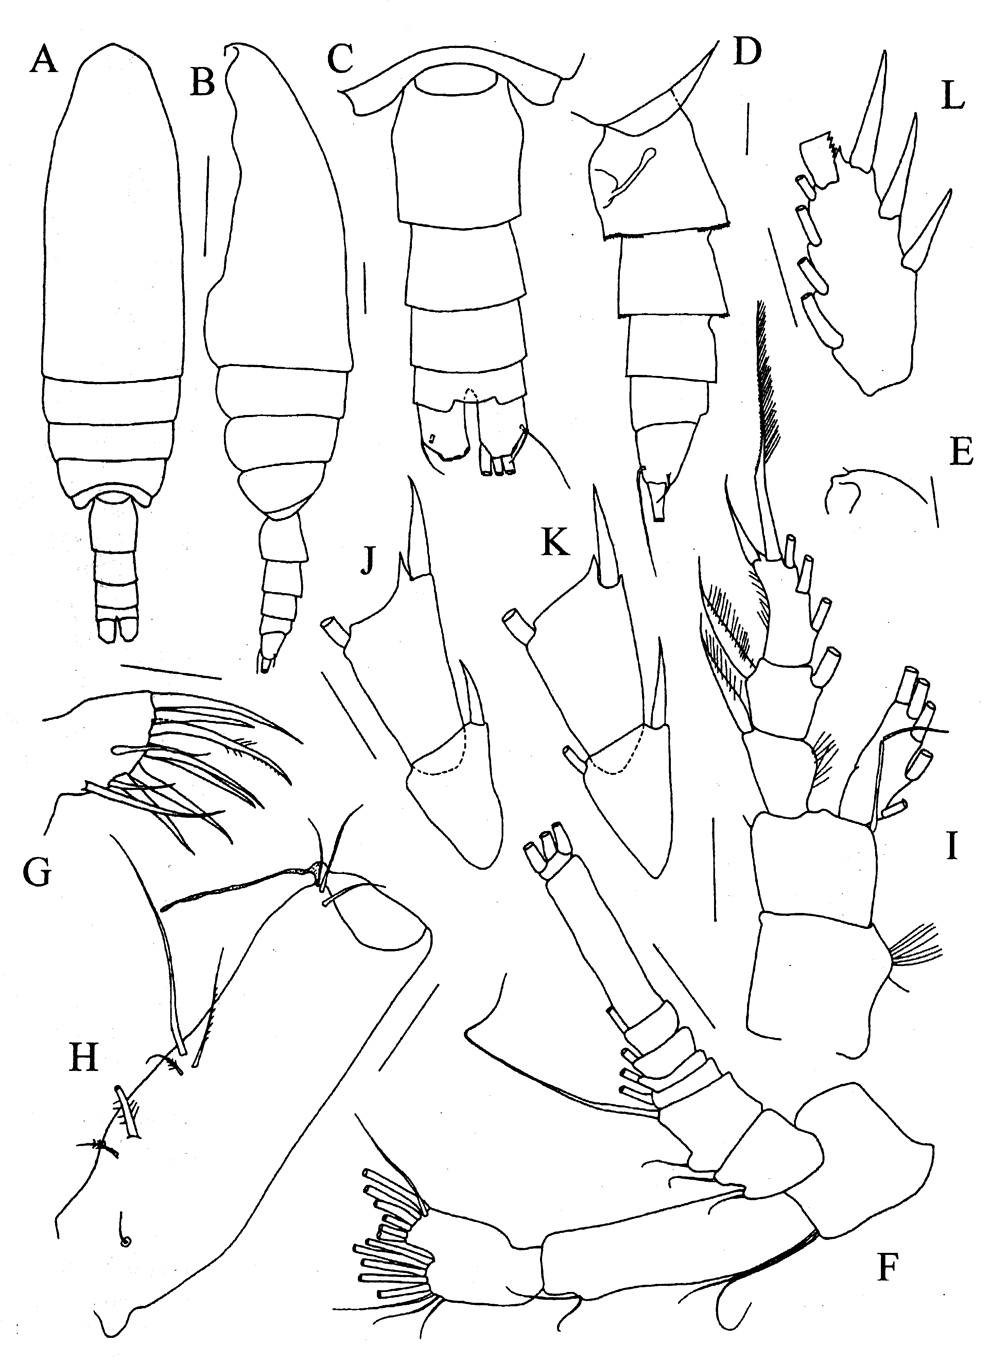 Species Bradyetes inermis - Plate 3 of morphological figures